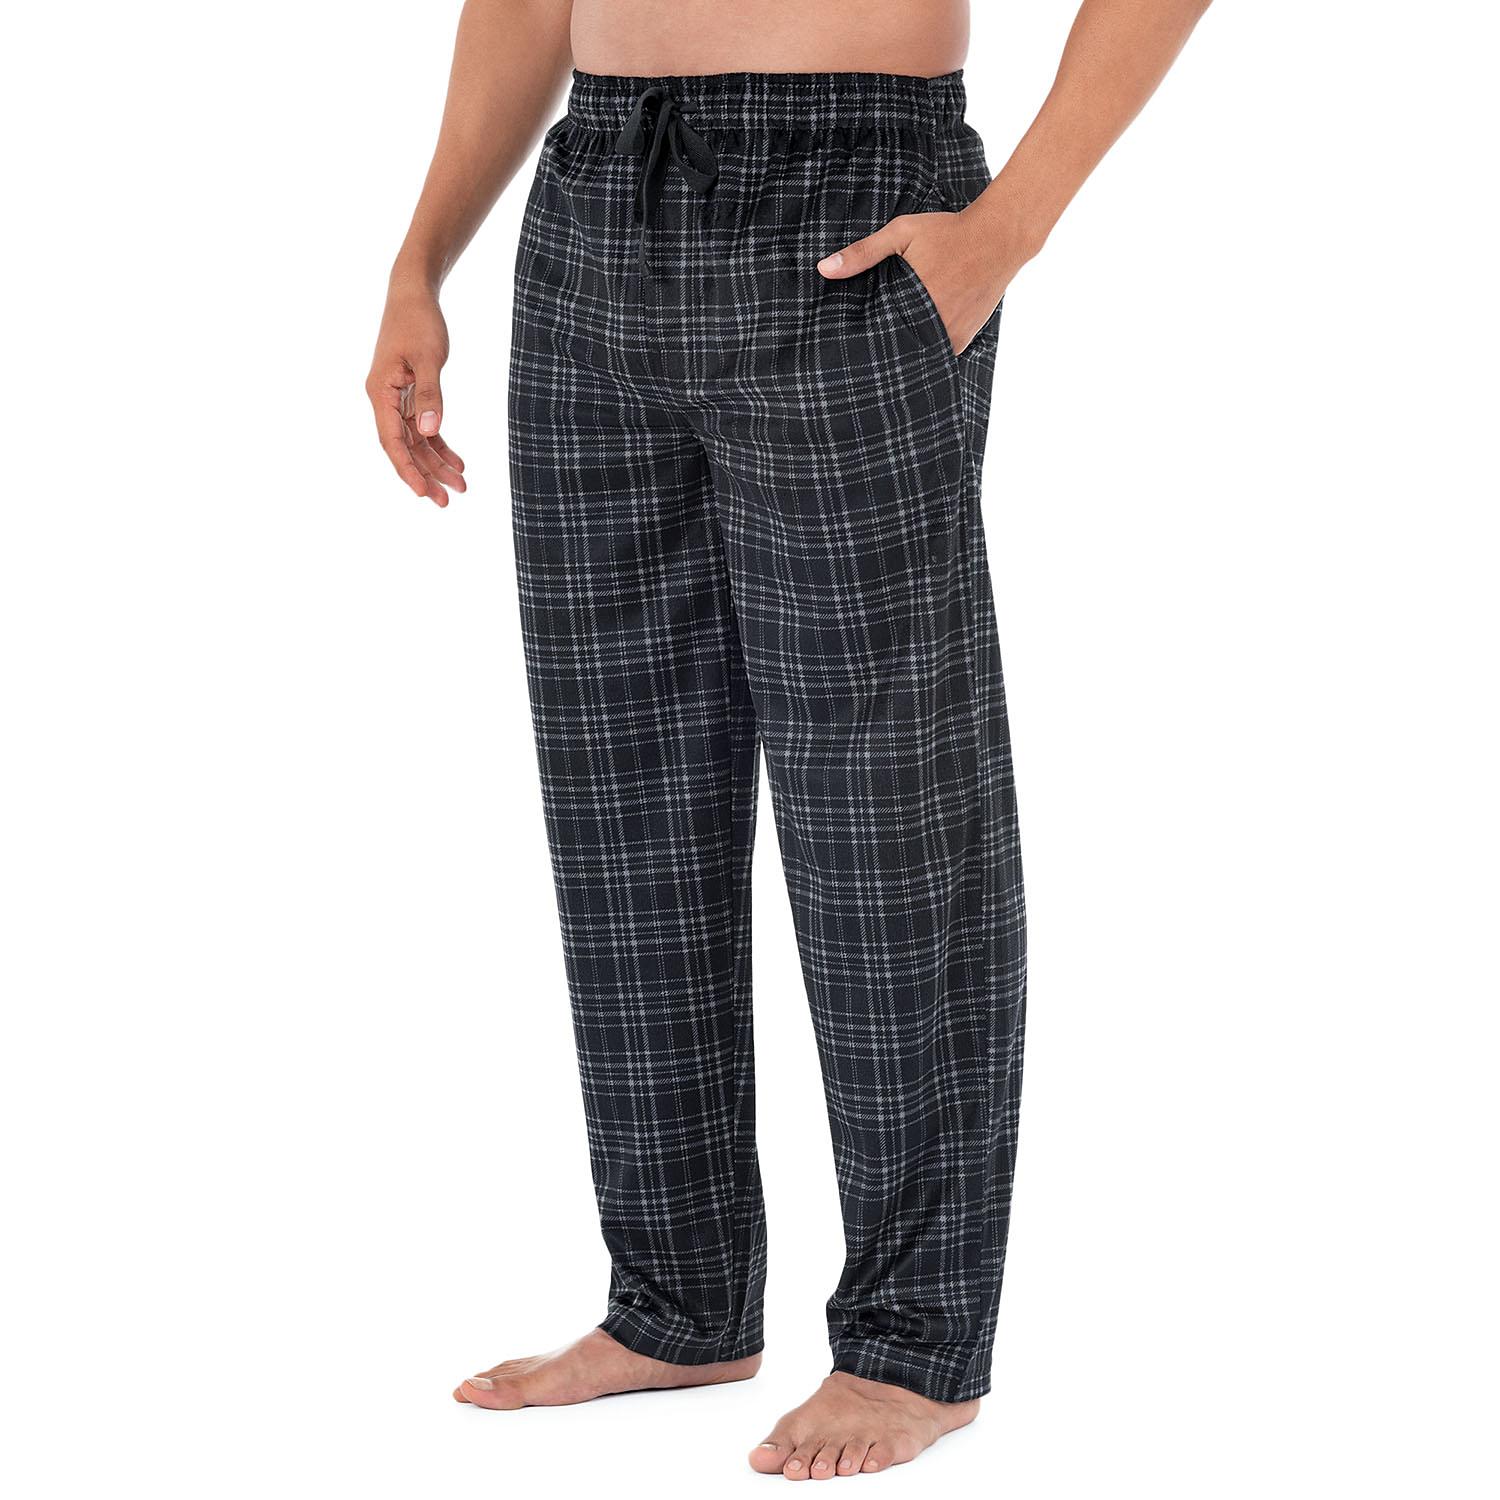 Izod Men's Micro Fleece Pajama Pant in Black, Size Medium - image 2 of 3